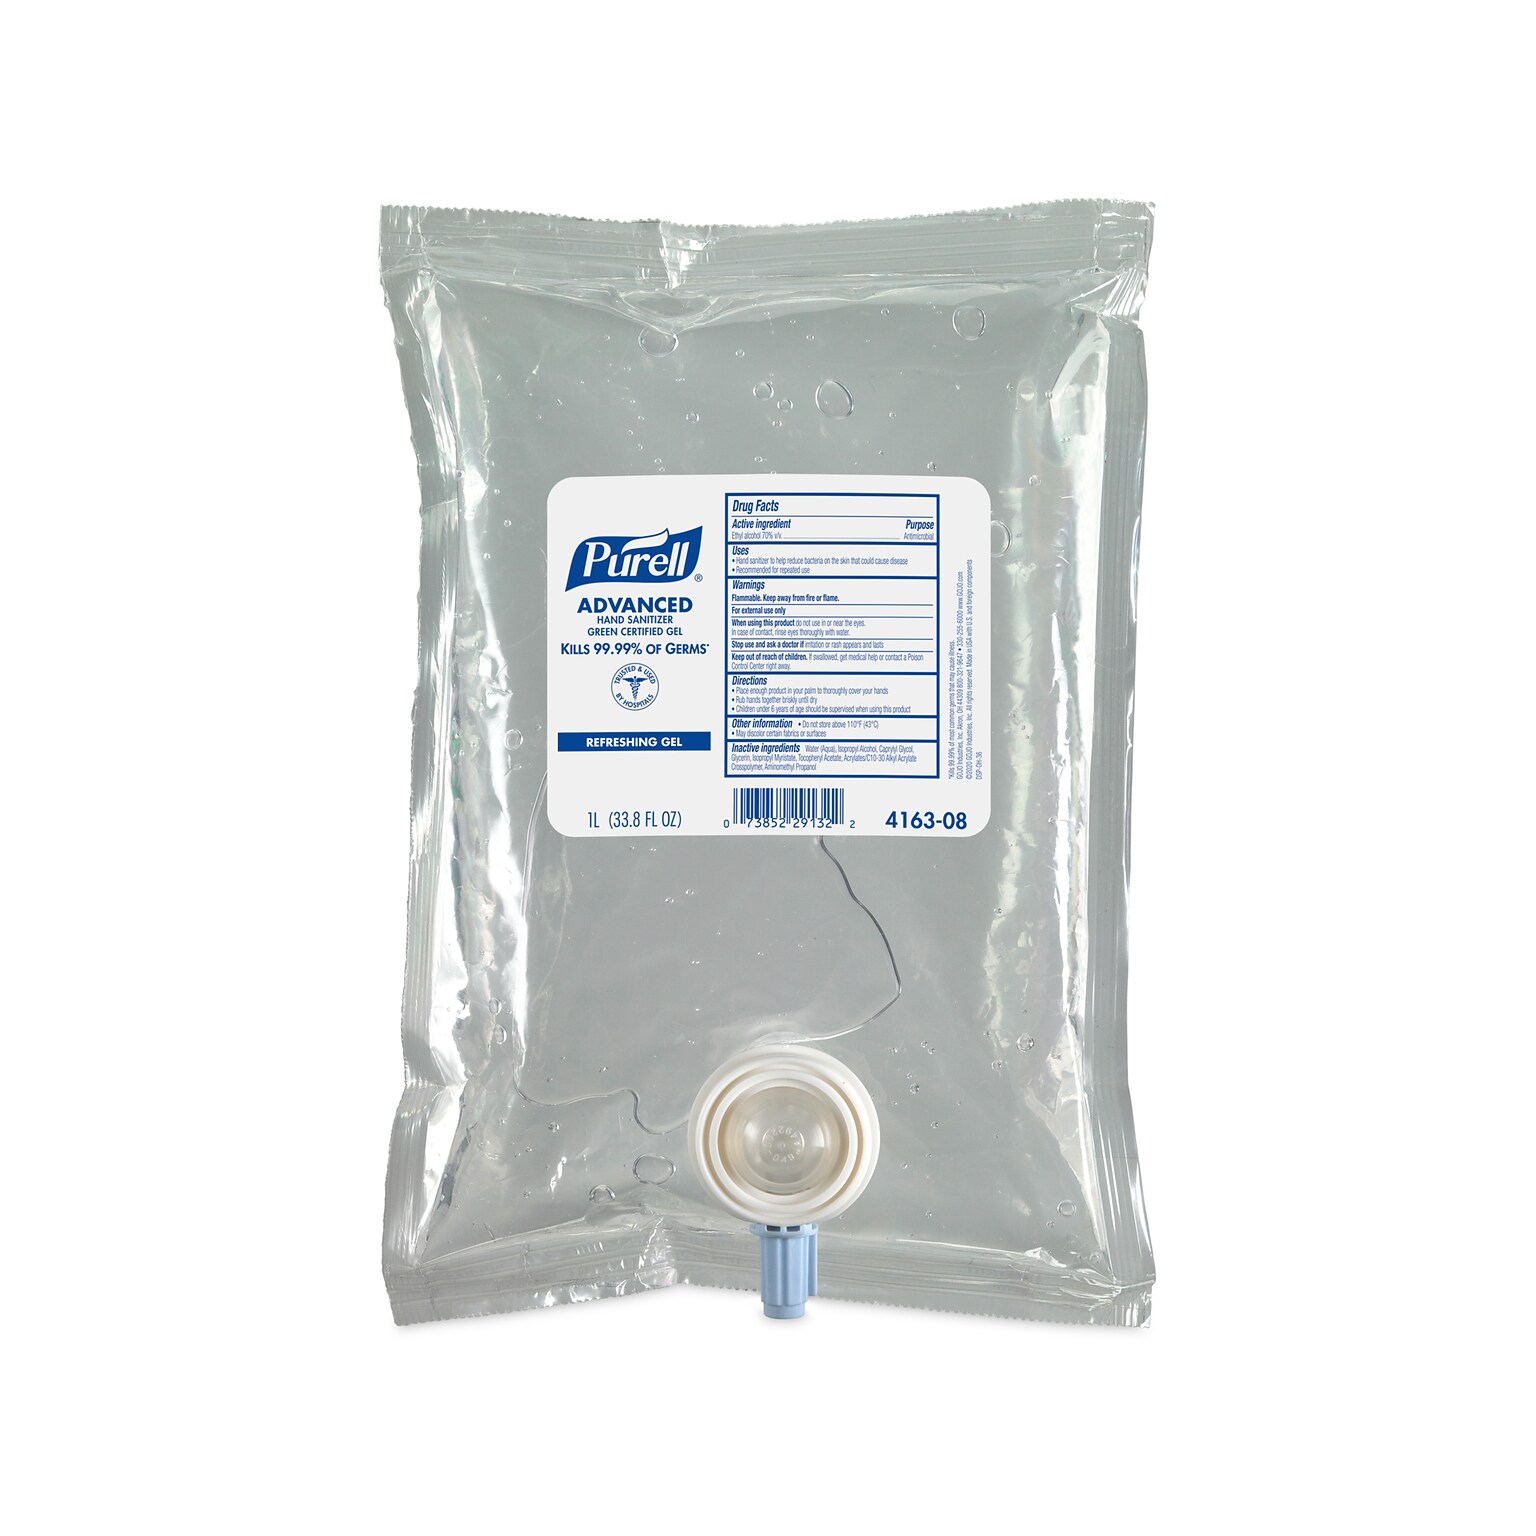 PURELL Advanced 70% Alcohol Gel Hand Sanitizer Refill for CS2 Dispensing System, 1000mL, 8/Carton (4163-08)